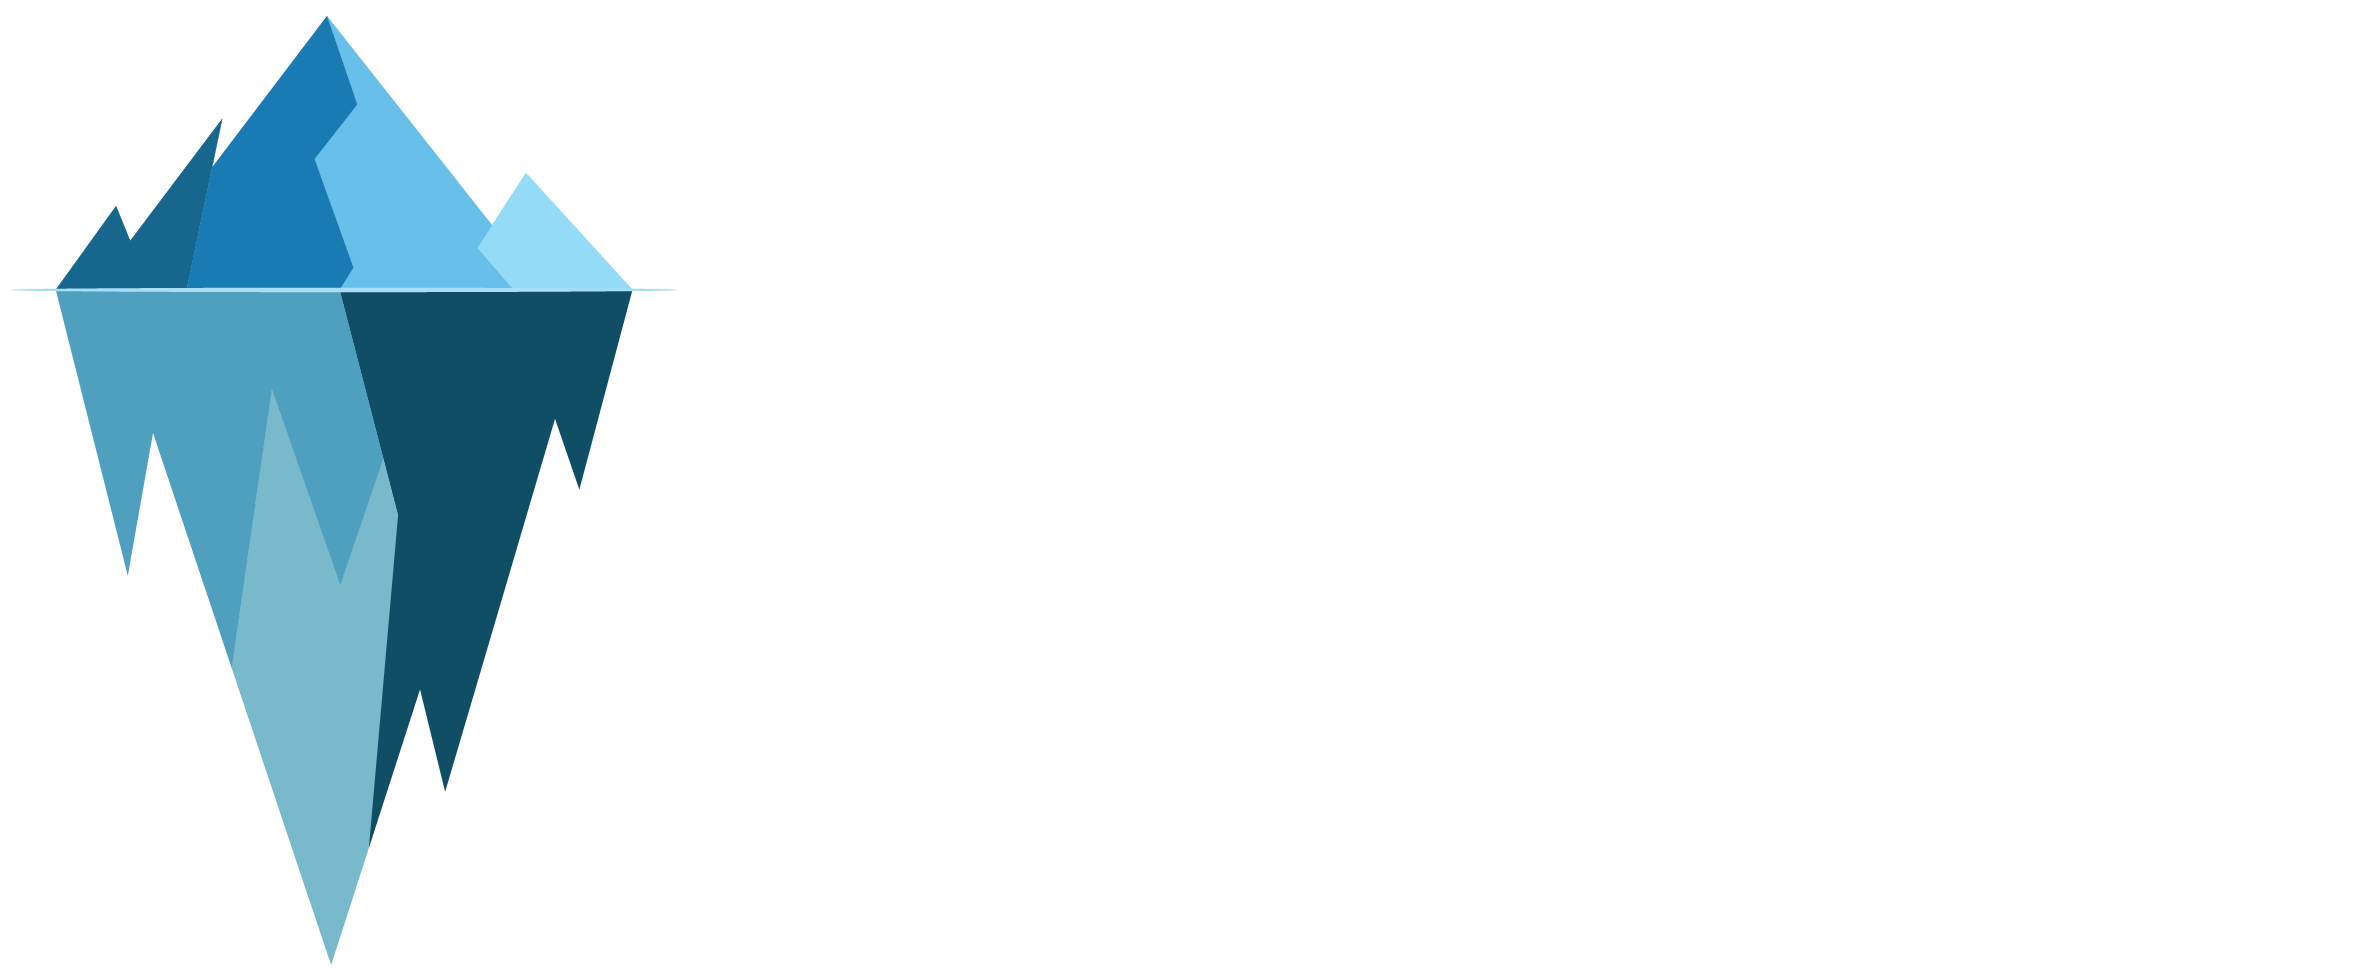 Trade Digitalisation Services